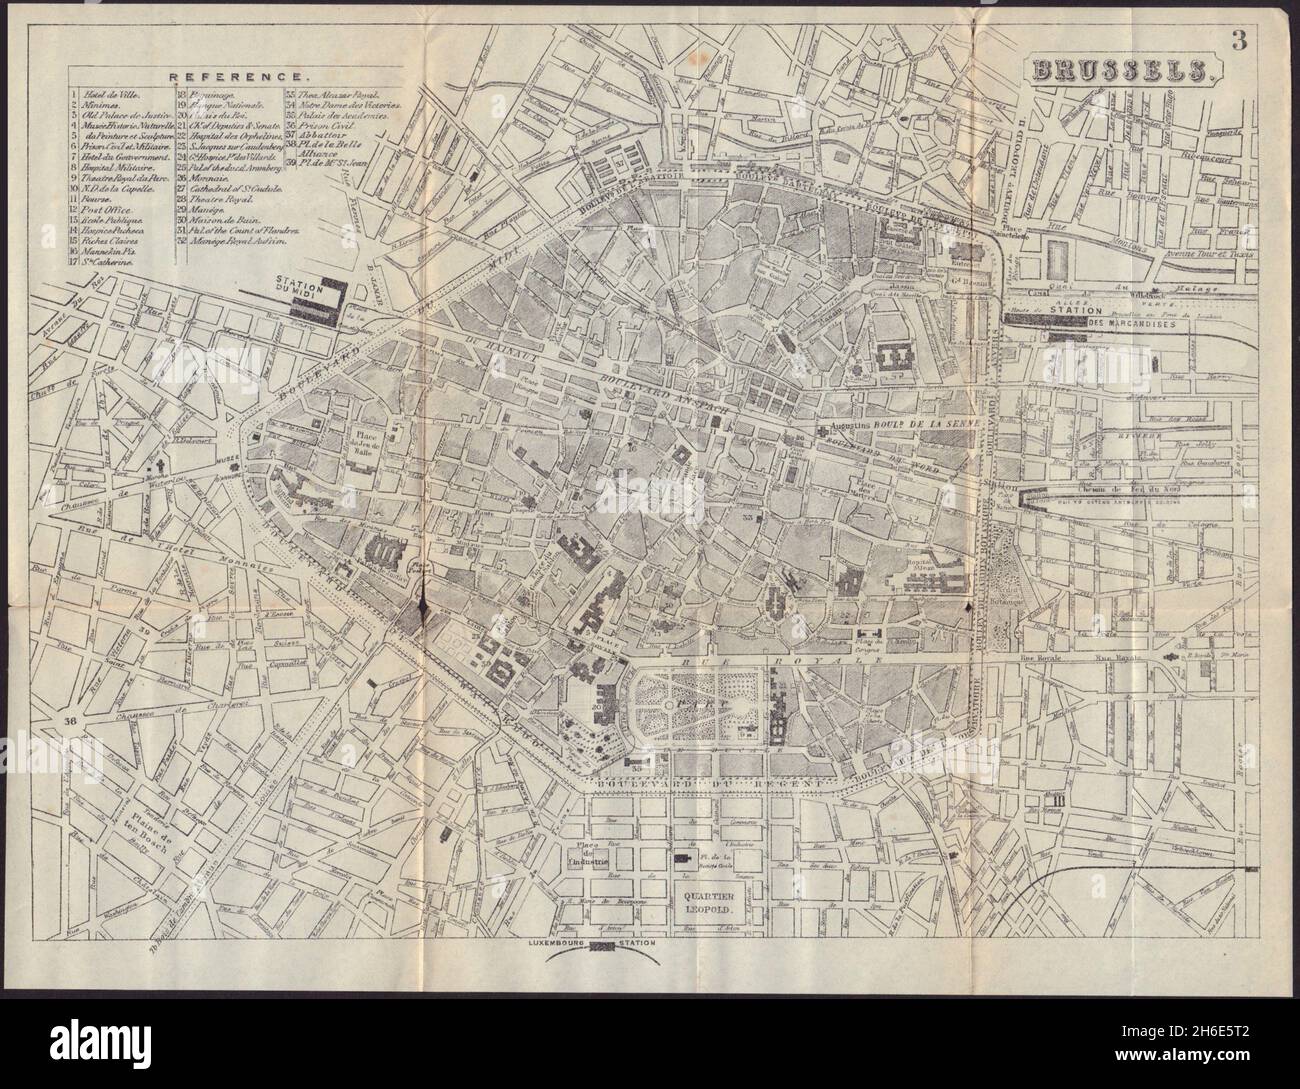 BRUSSELS BRUSSEL BRUXELLES antique town plan city map. Belgium. BRADSHAW 1892 Stock Photo